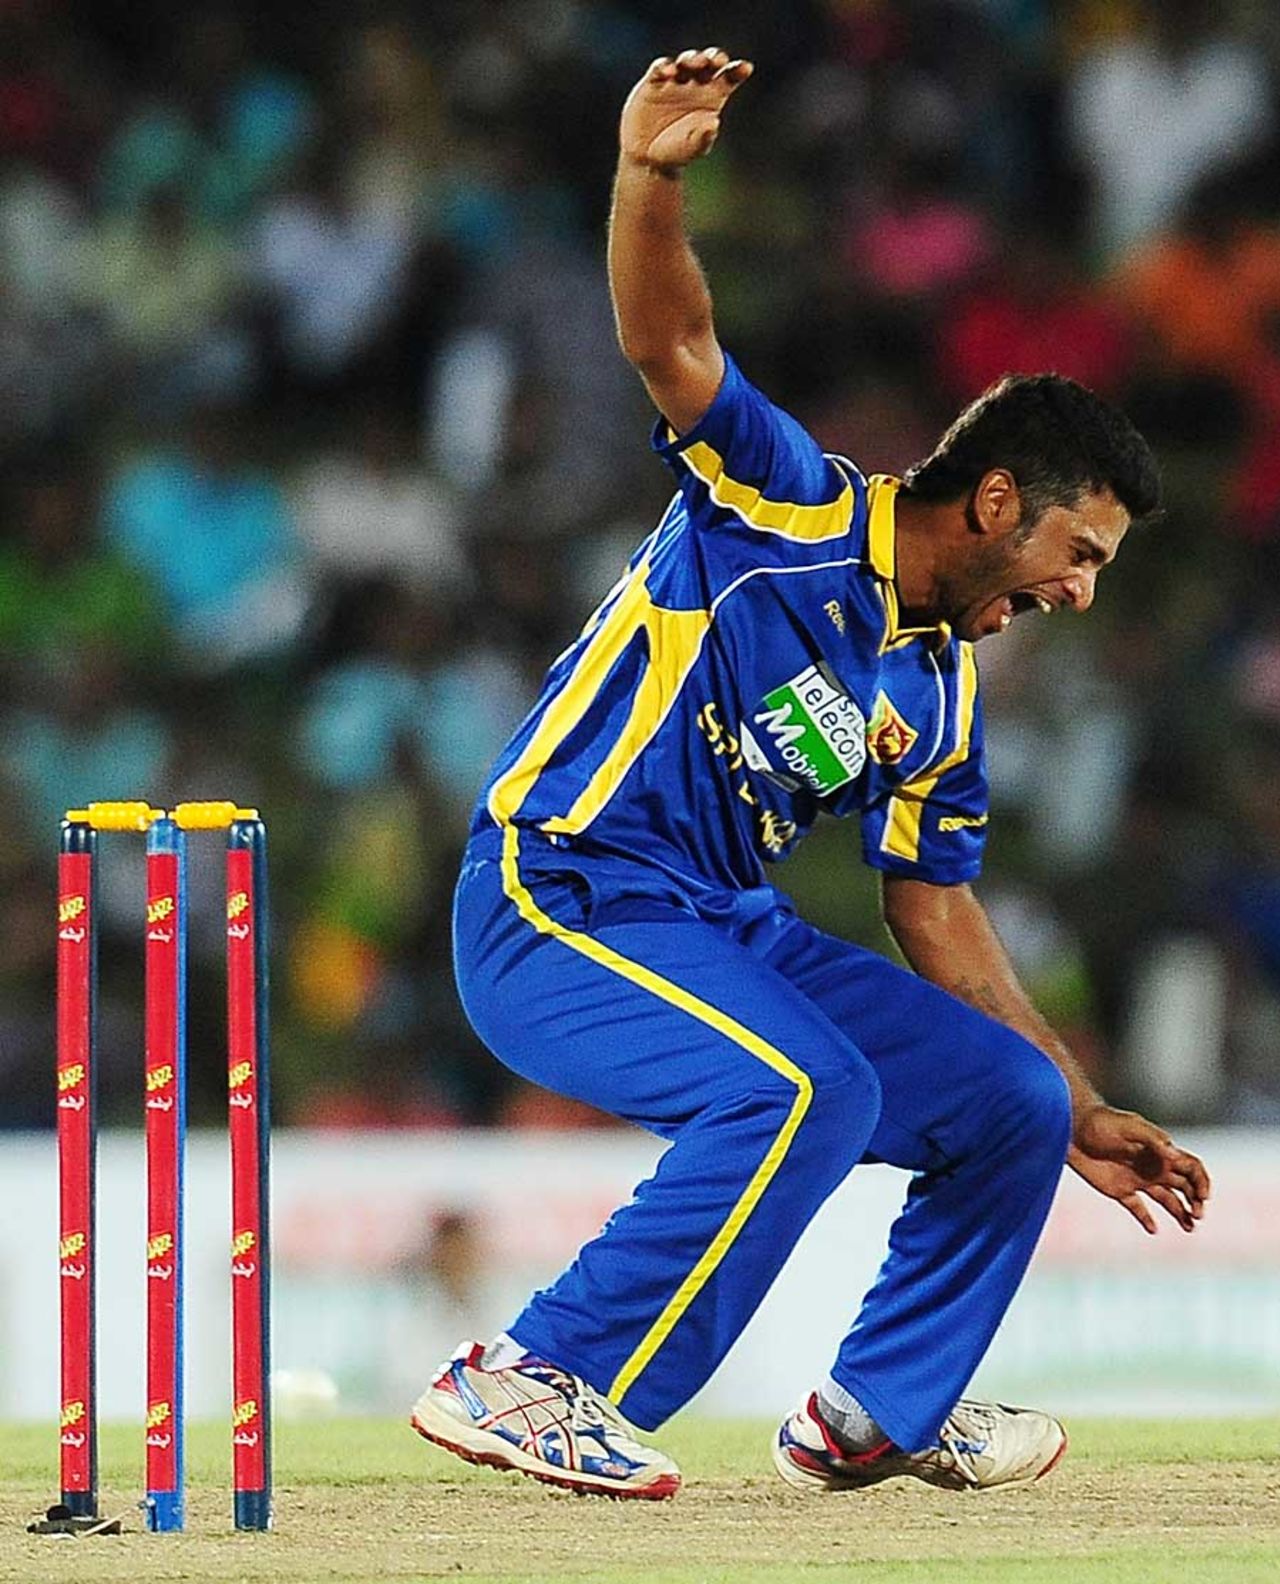 Kaushal Lokuarachchi picked up two quick wickets, Sri Lanka v Pakistan, 2nd T20I, Hambantota